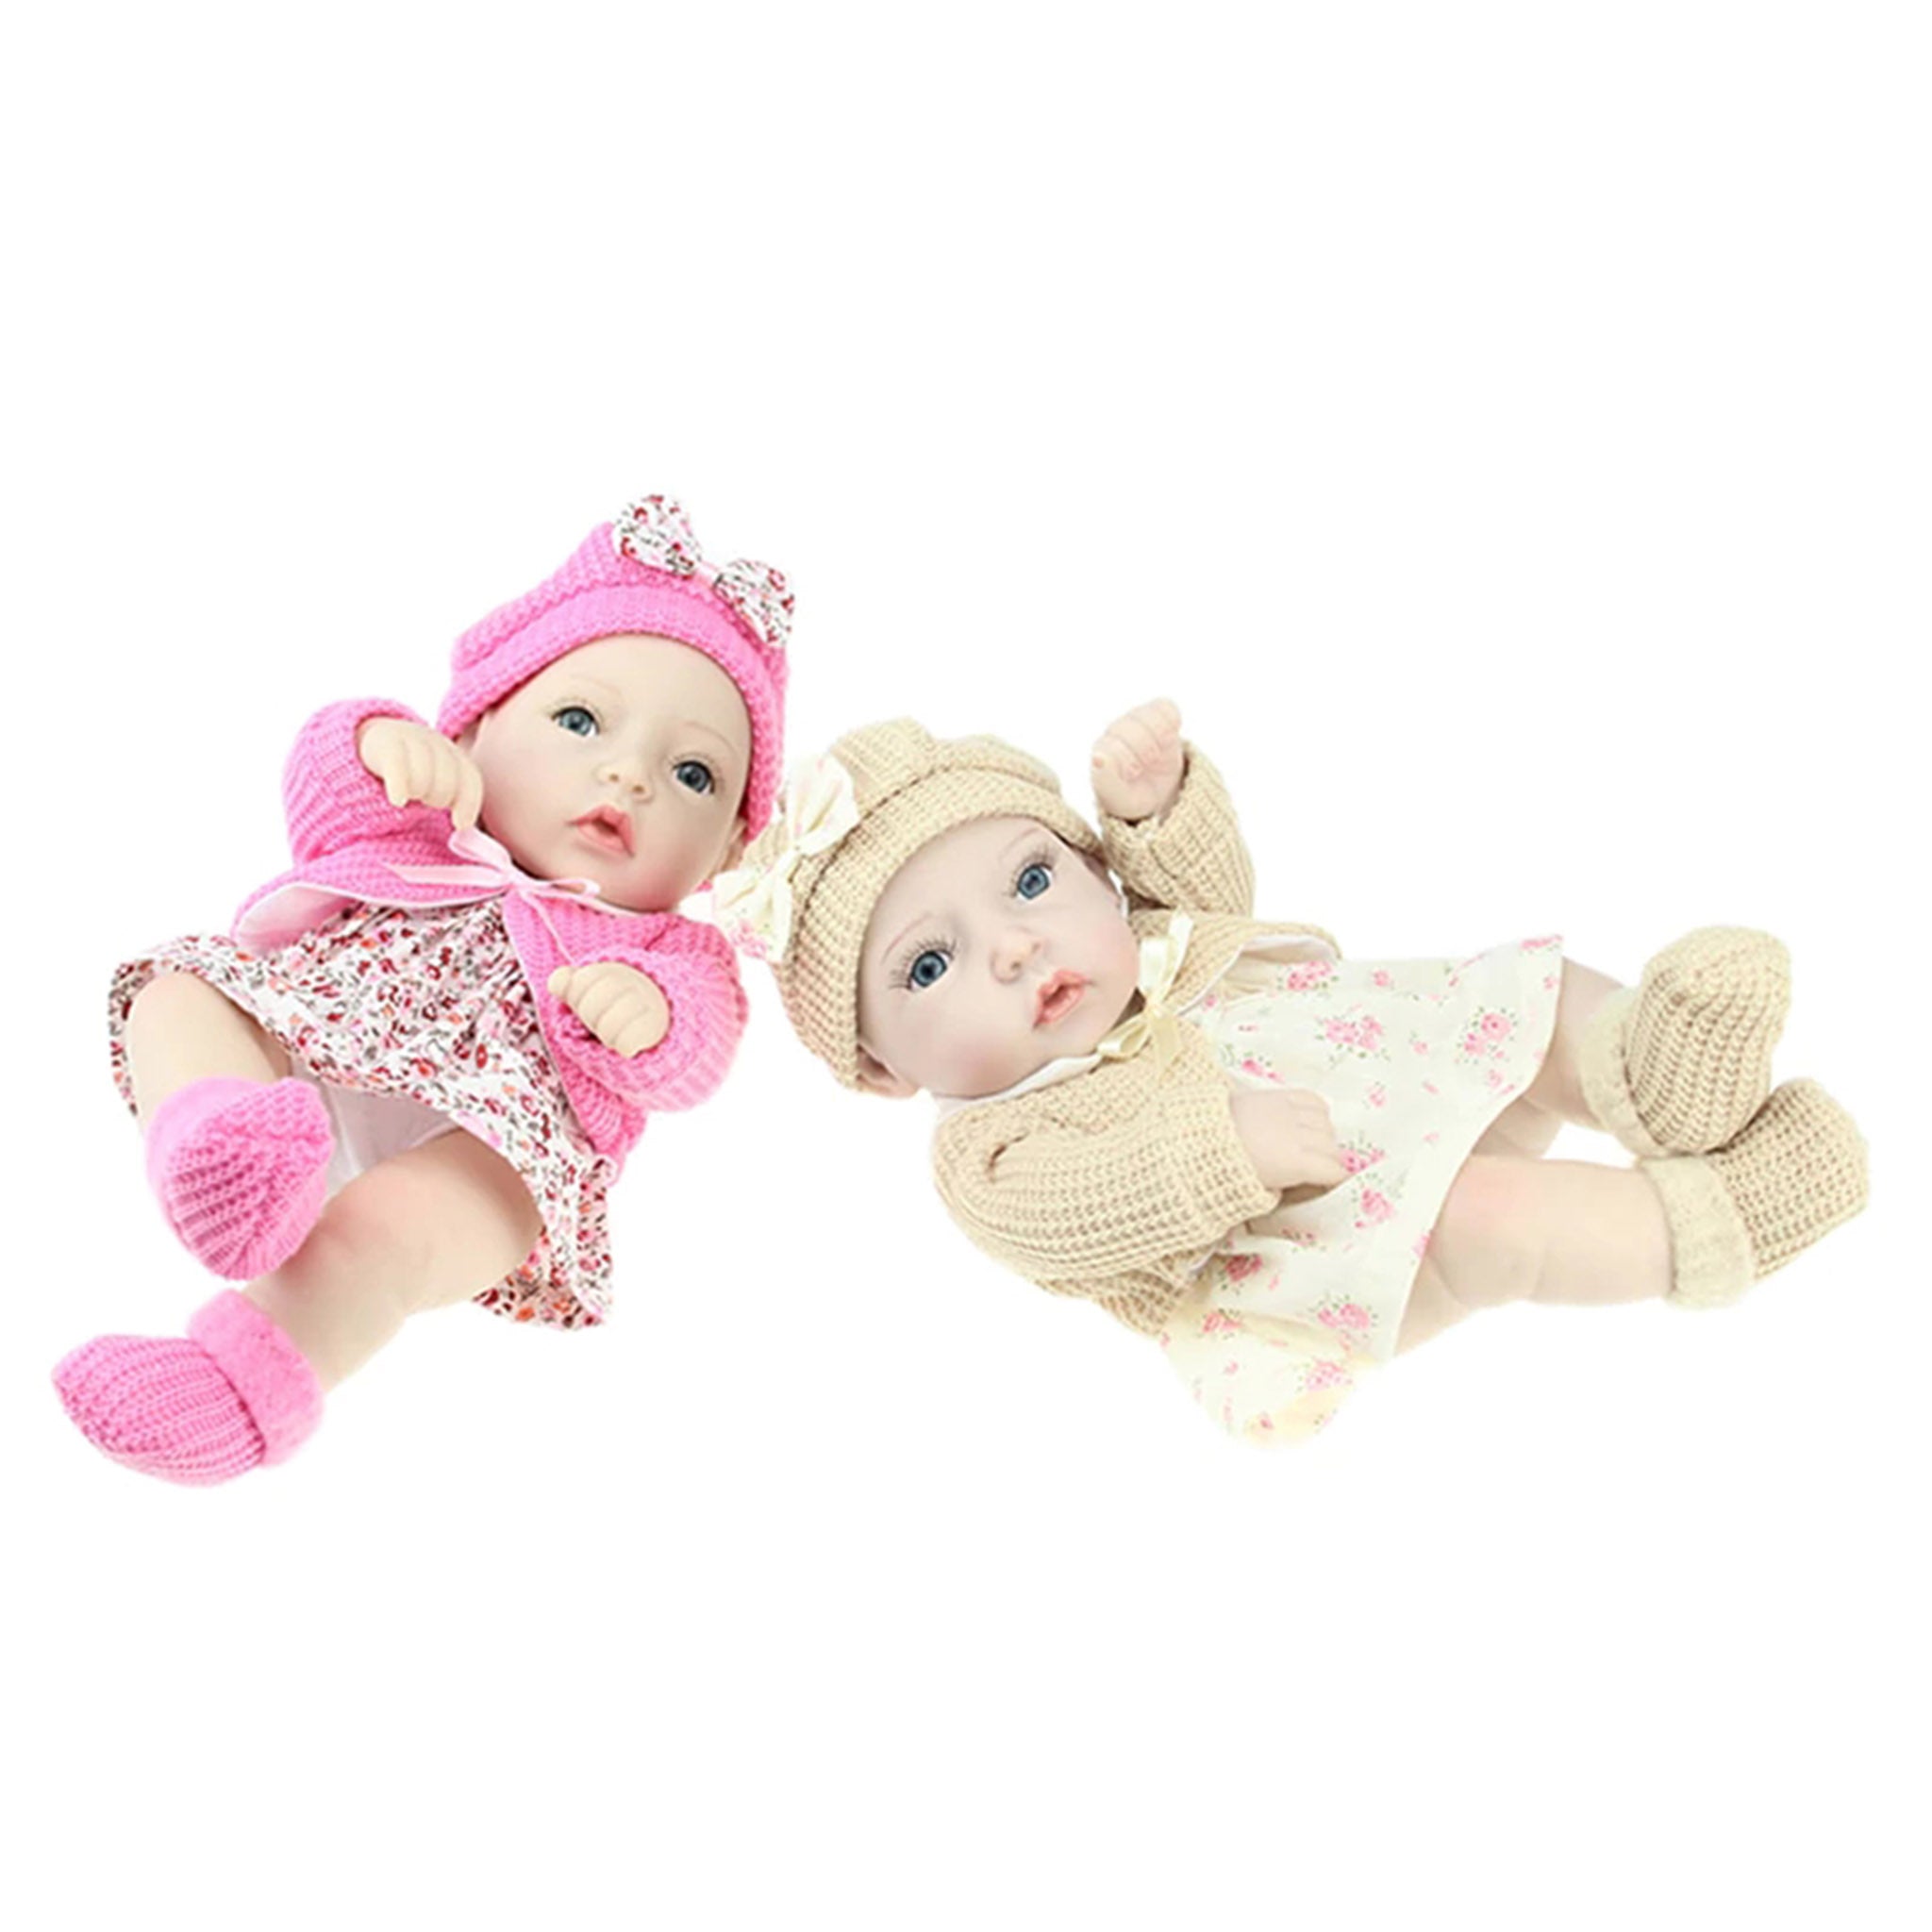 1pc 22-inch Full Body Vinyl Reborn Baby Doll, Lifelike Newborn Baby Girl  Doll In Pink Dress